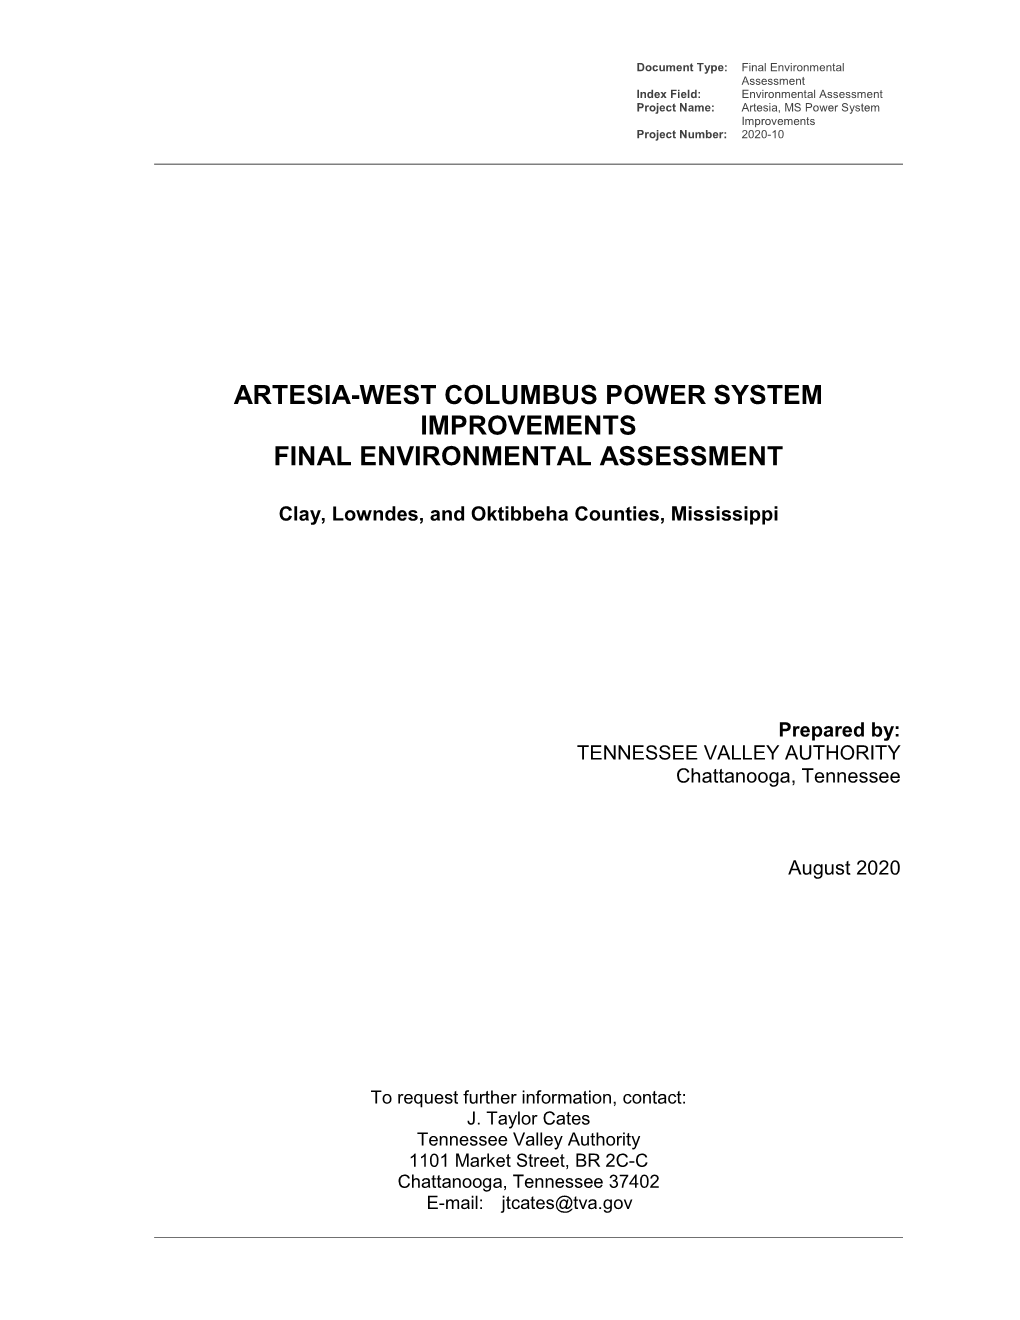 Artesia-West Columbus Power System Improvements Final Environmental Assessment